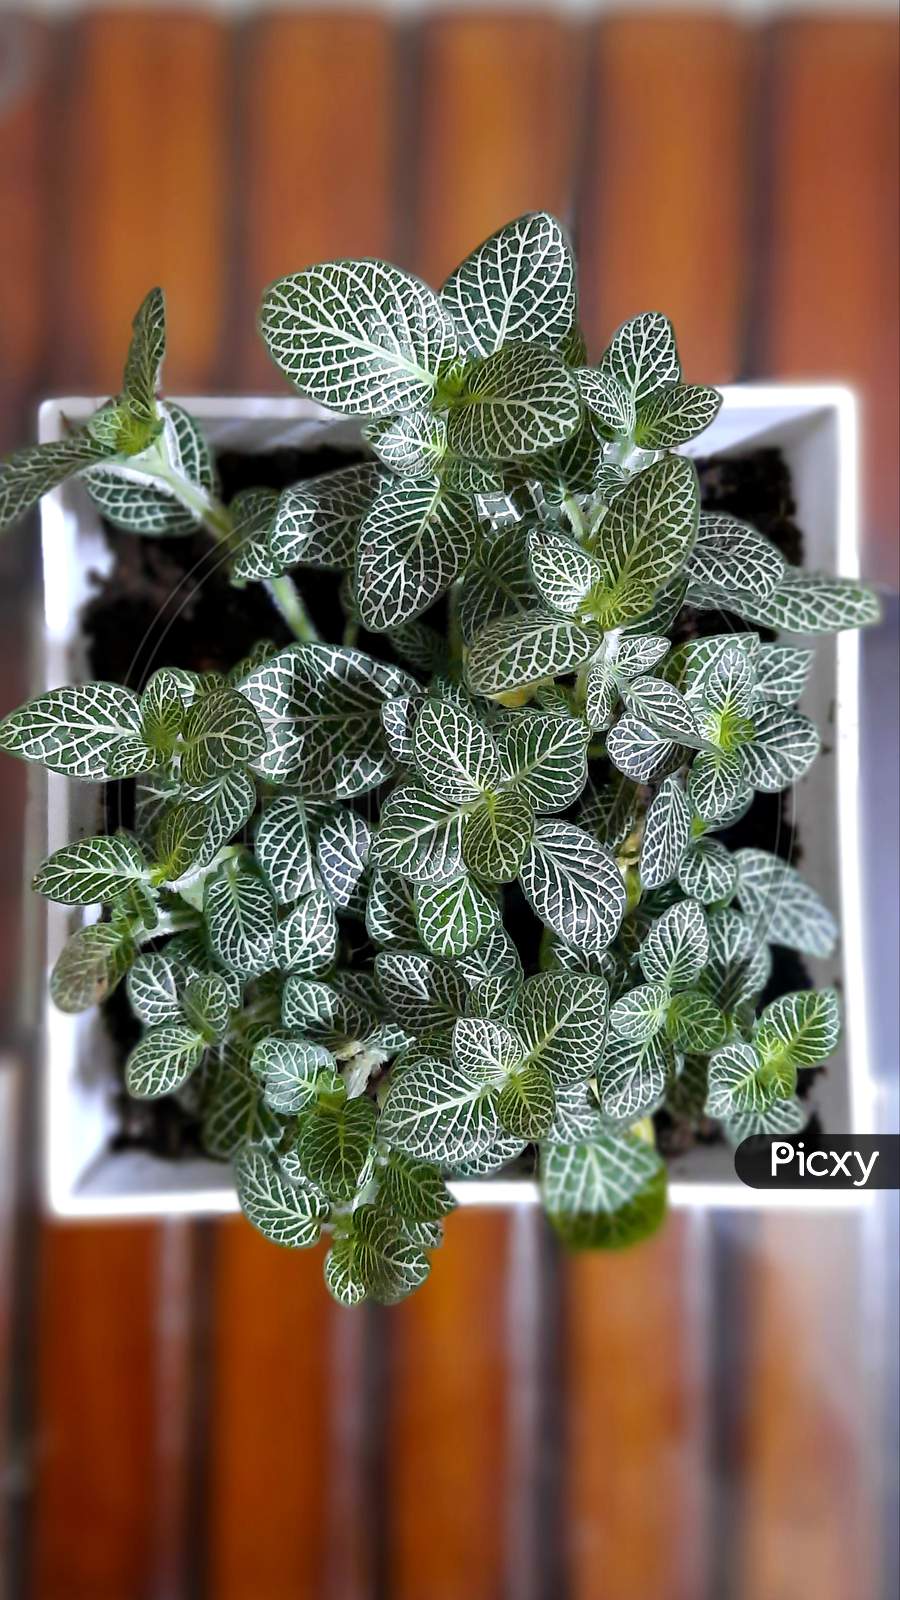 Fittonia plants